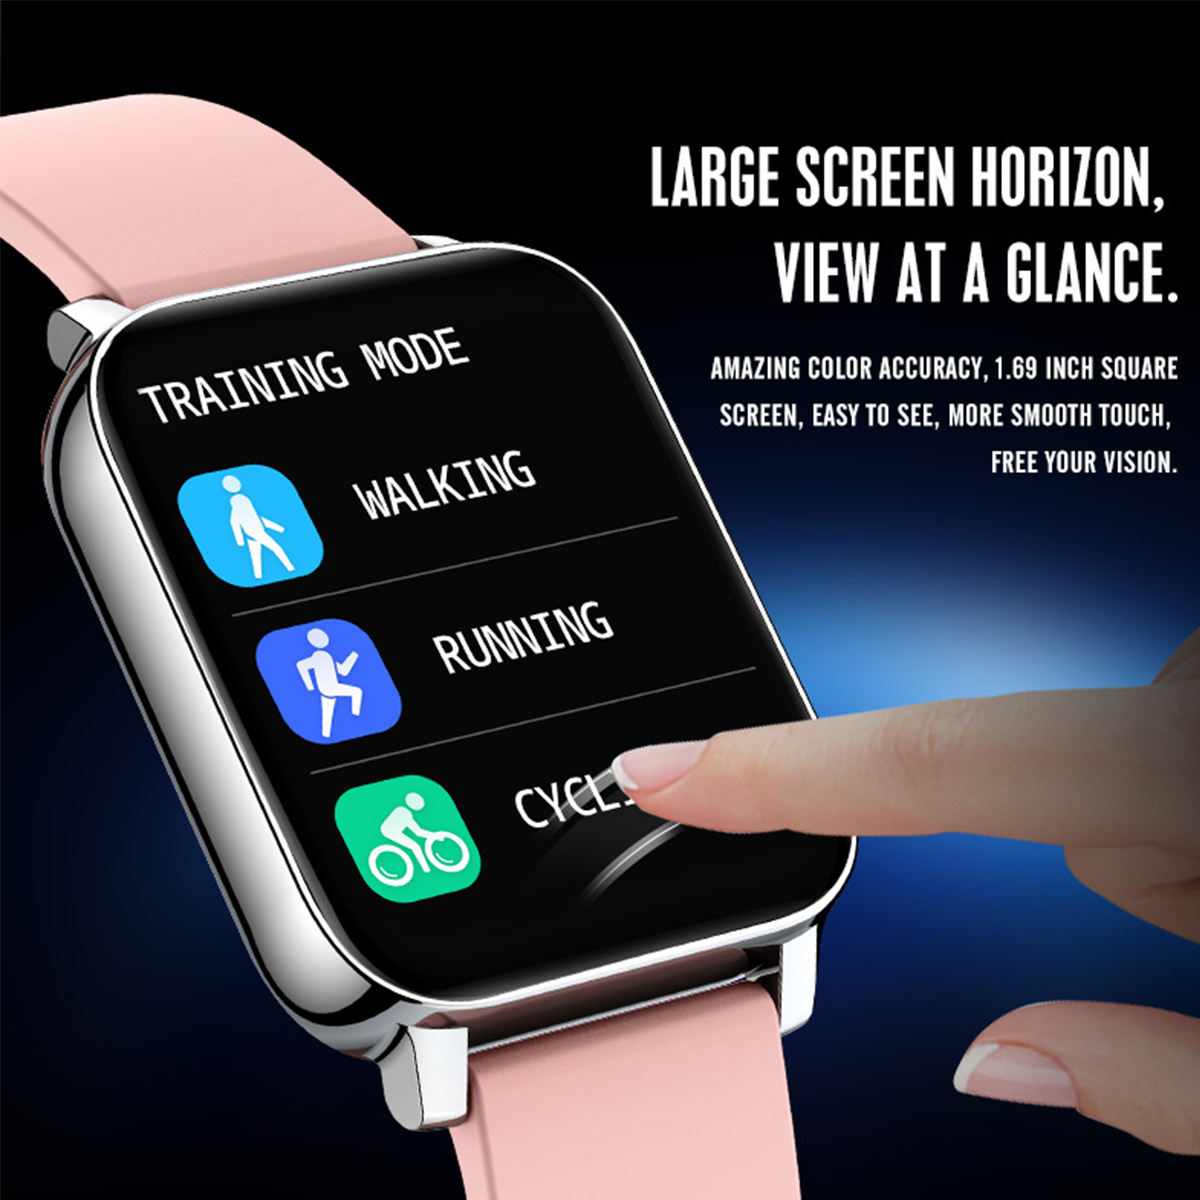 Silikon, Touch Metall-Design, IP67 Smartwatch Full Wasserdicht Mehrere BRIGHTAKE Smartwatch Sportmodi, - Rosa 1.69